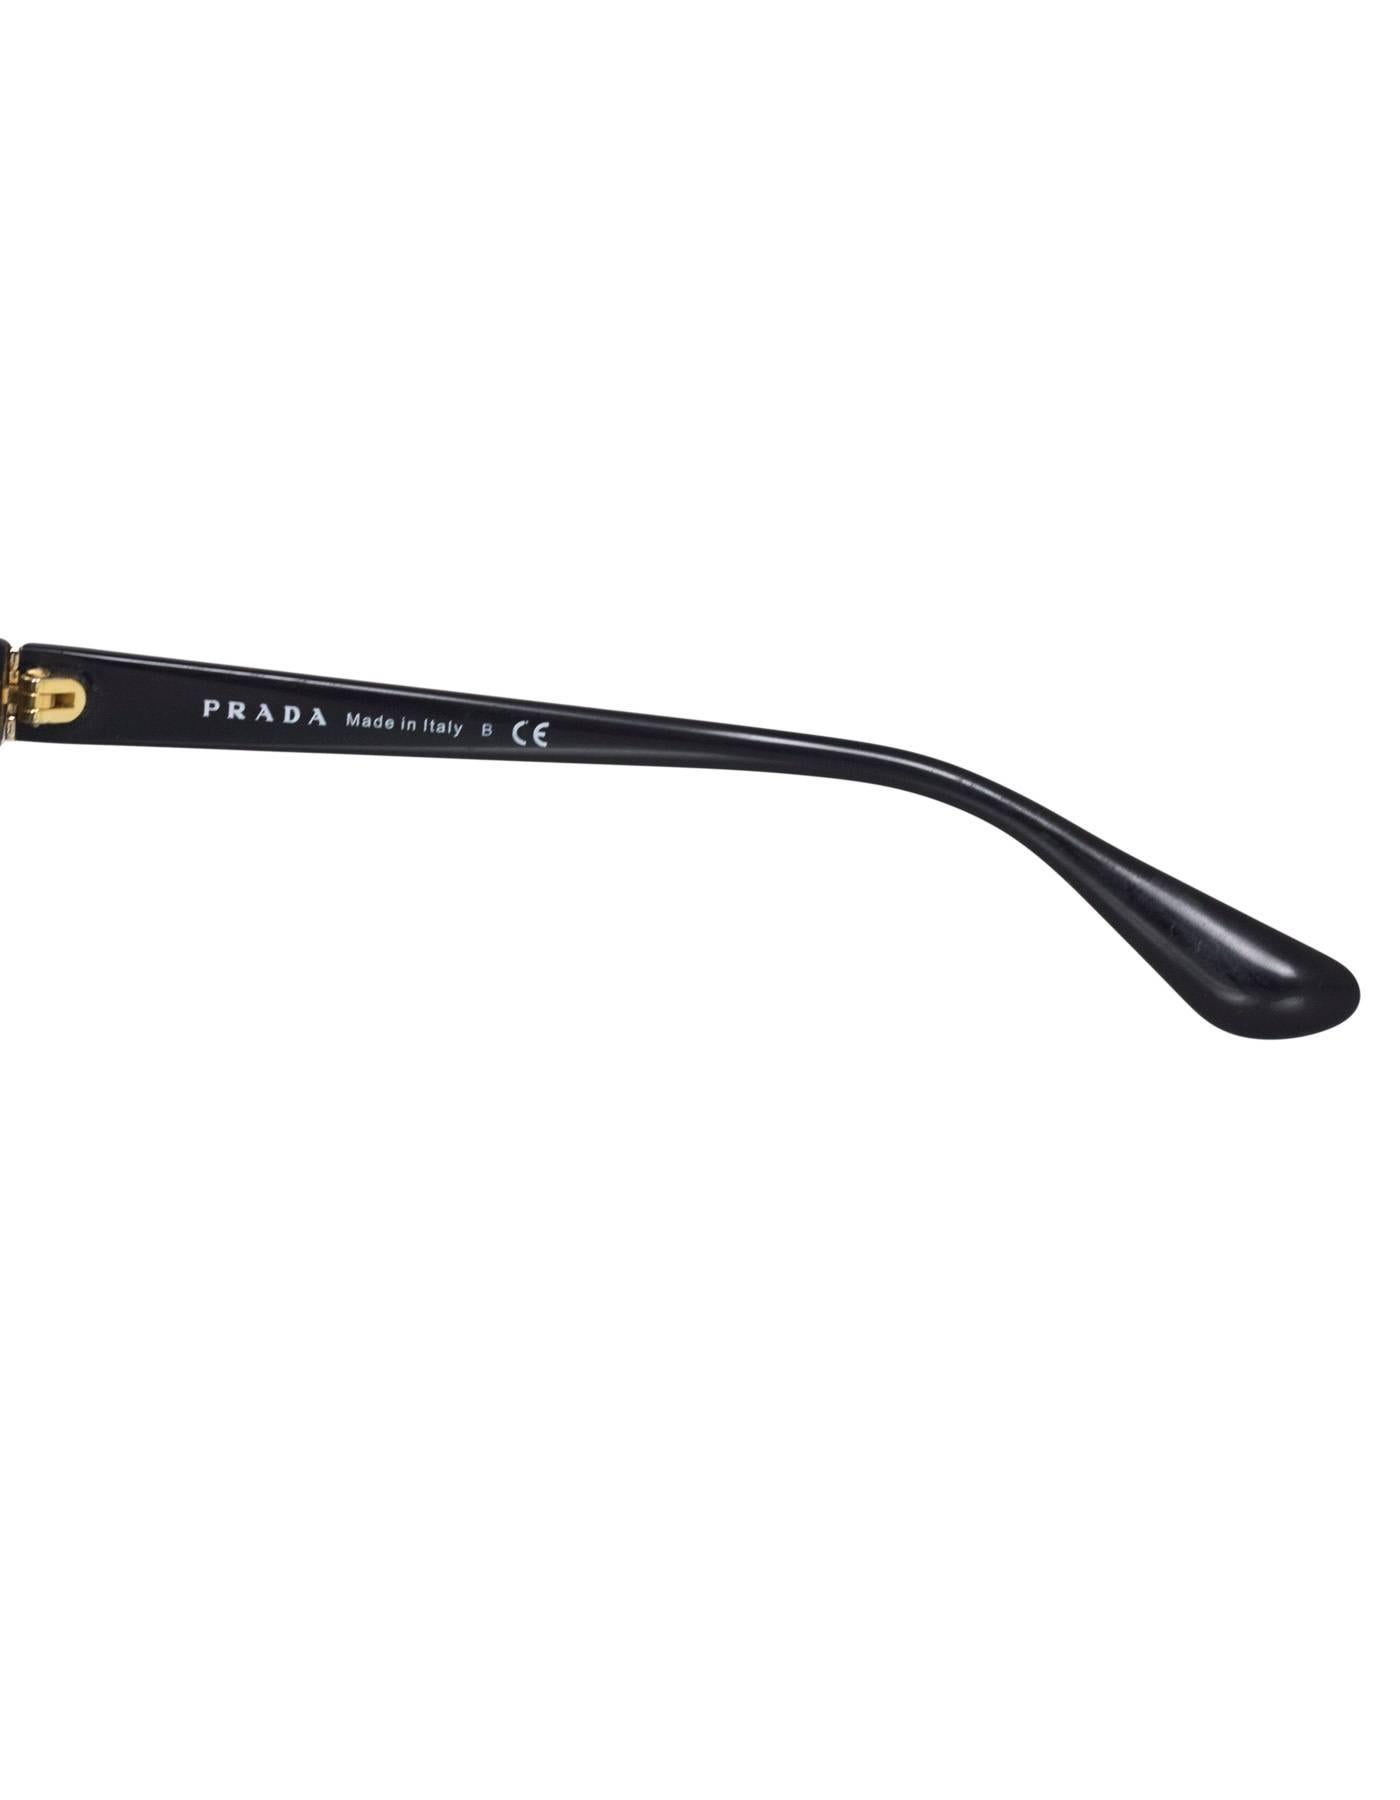 Prada Black Resin Sunglasses with Box and Case 3